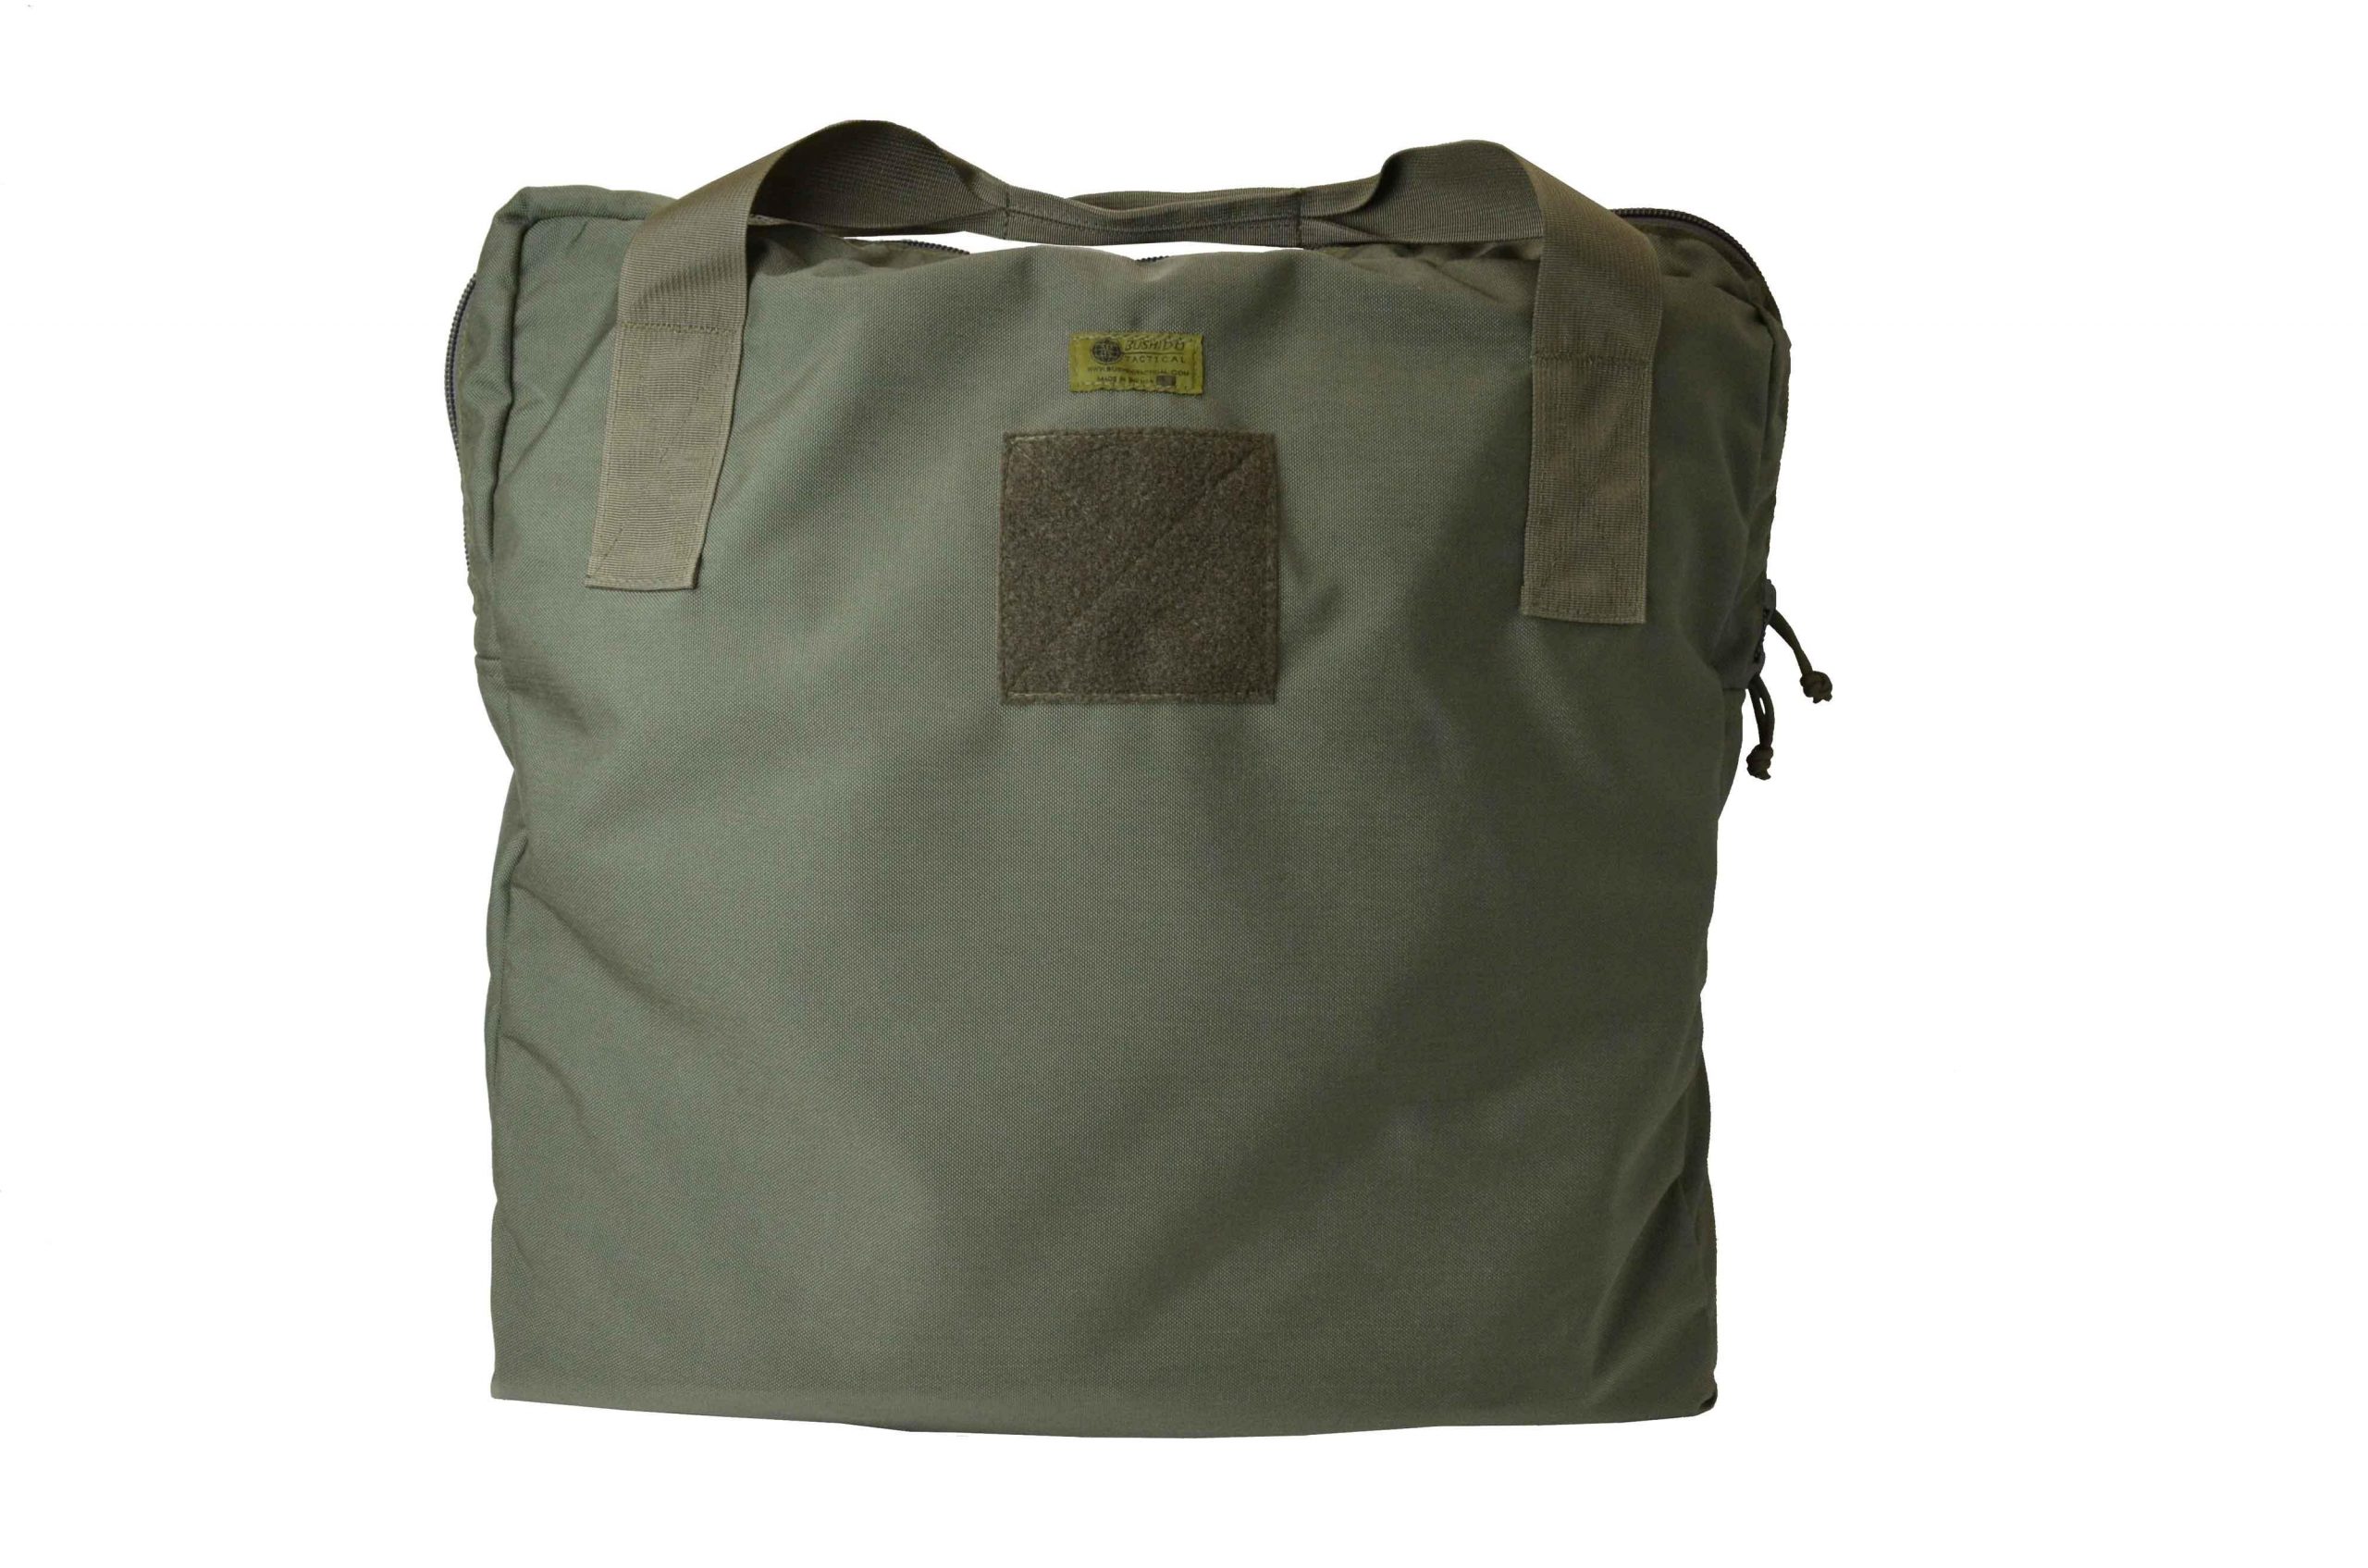 Gear / Utility / Tactical Vest / Body Armor Bag - Large - Bushido Tactical